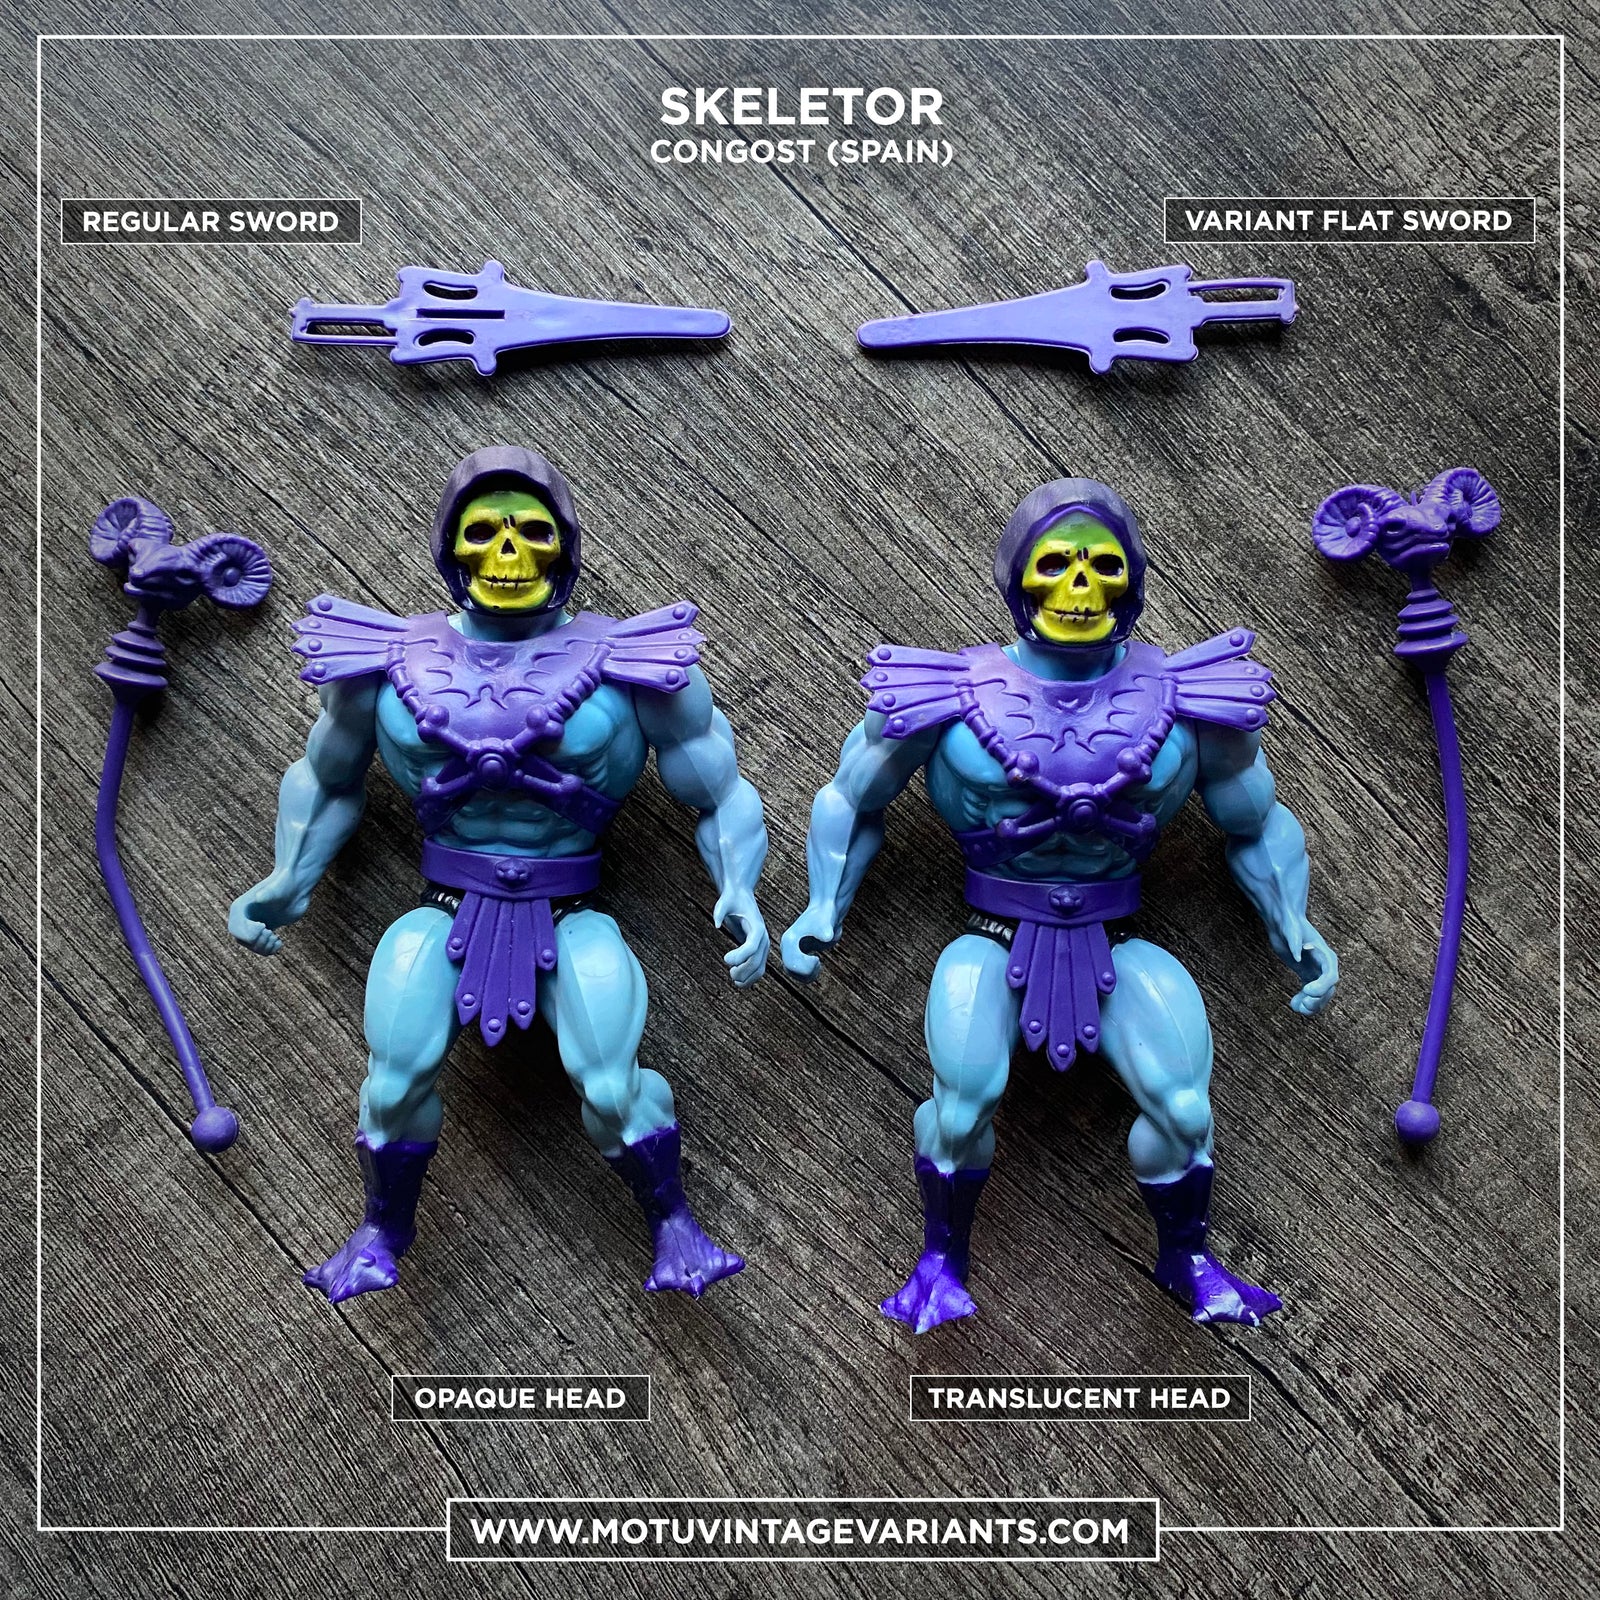 Skeletor Congost (Spain)